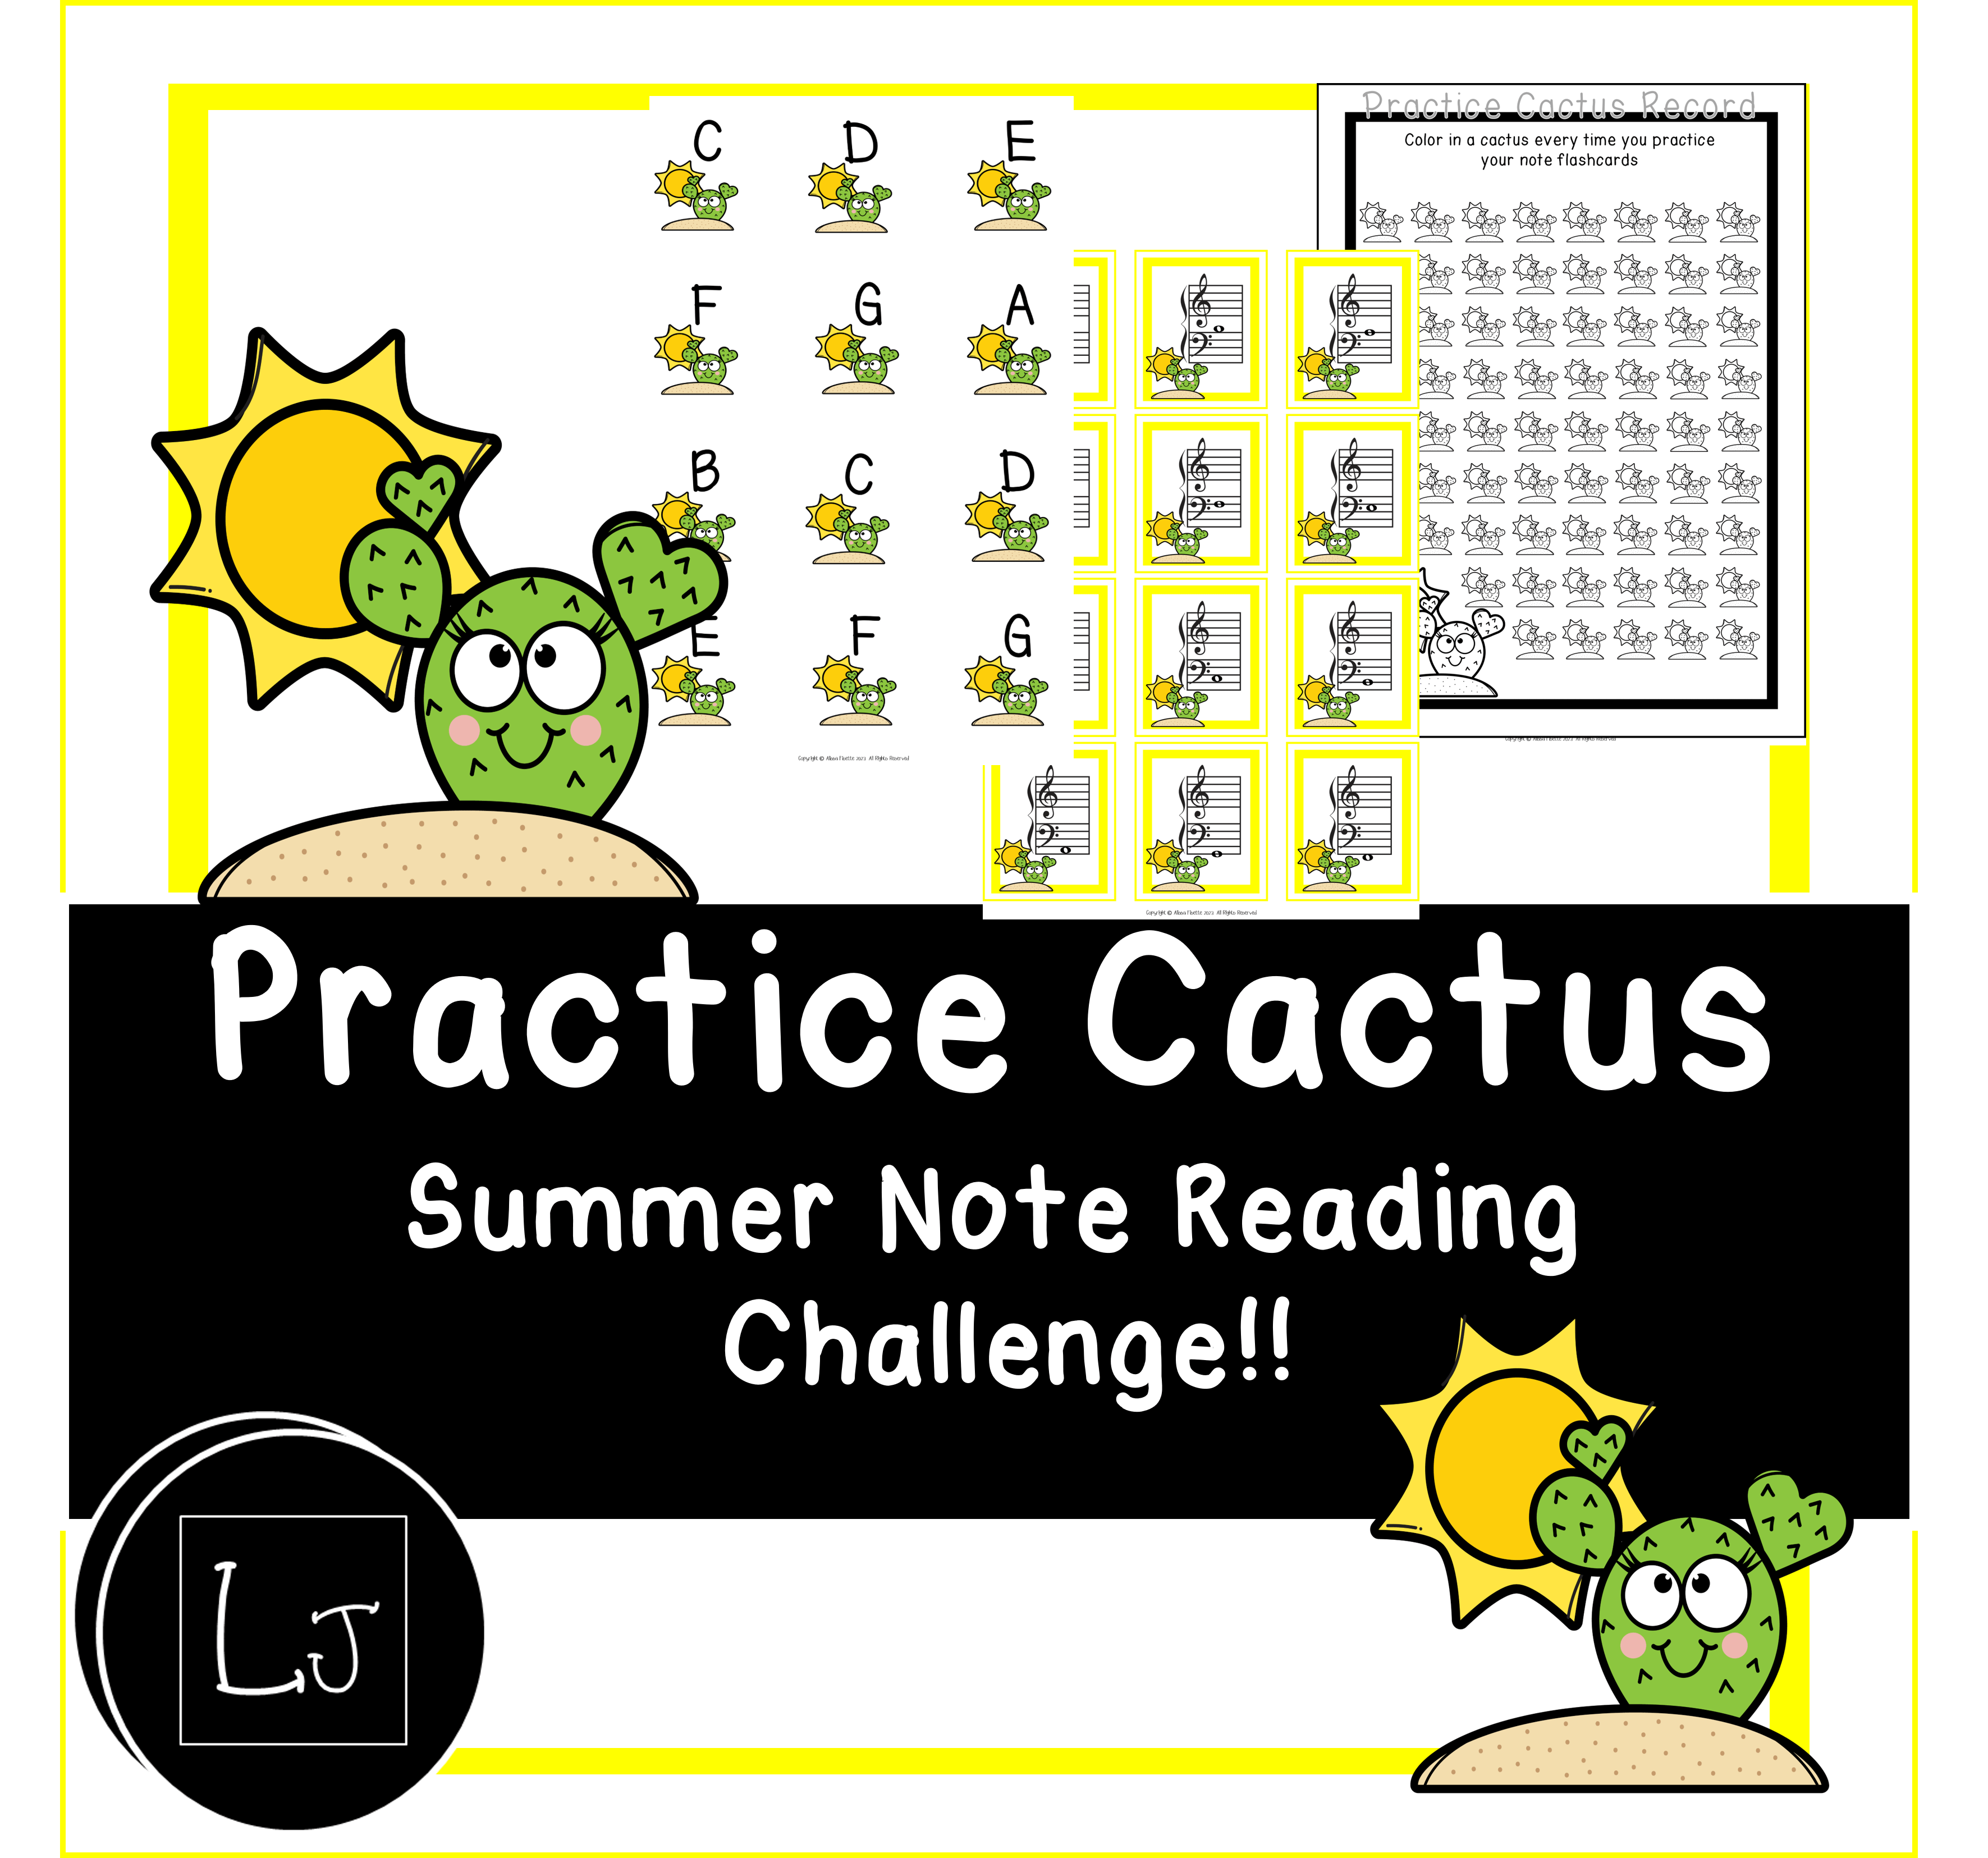 Practice Cactus Summer Note Reading Challenge